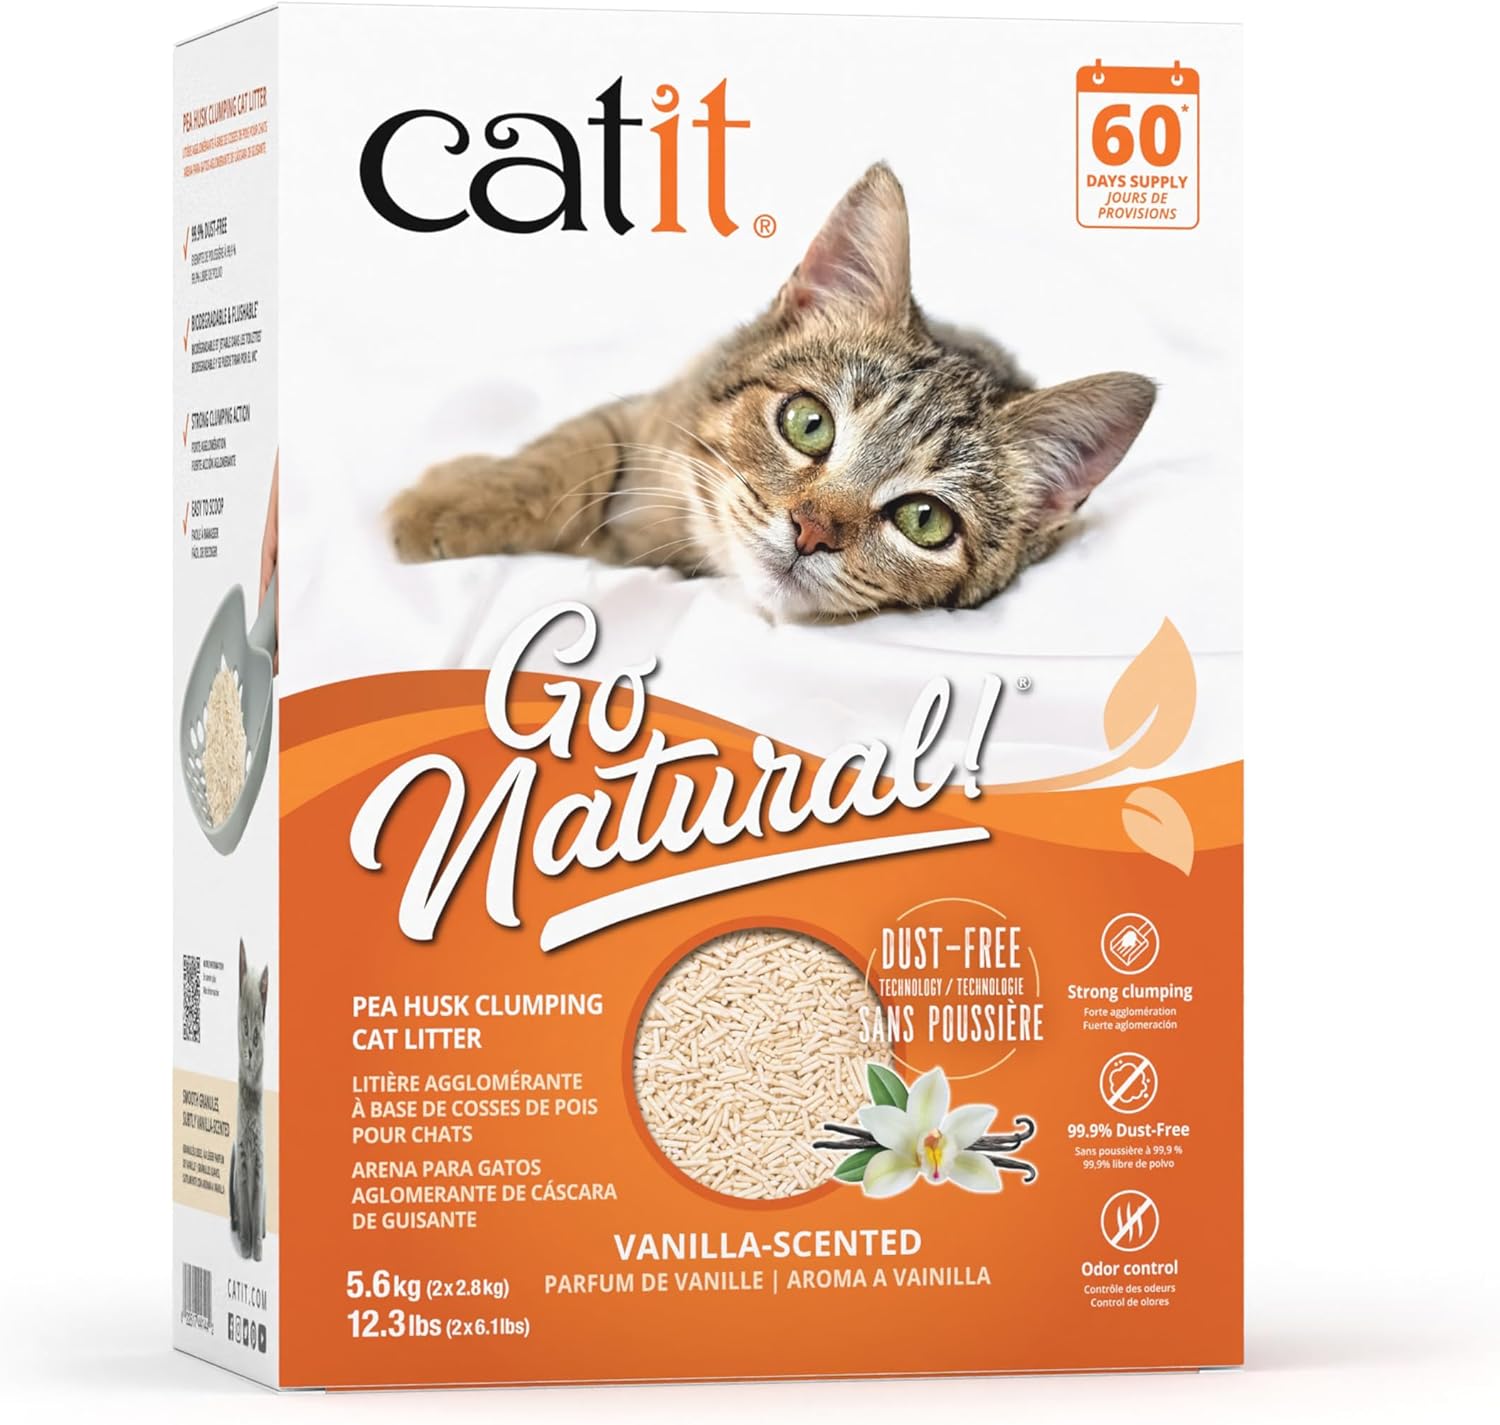 Catit Go Natural Pea Husk Clumping Cat Litter